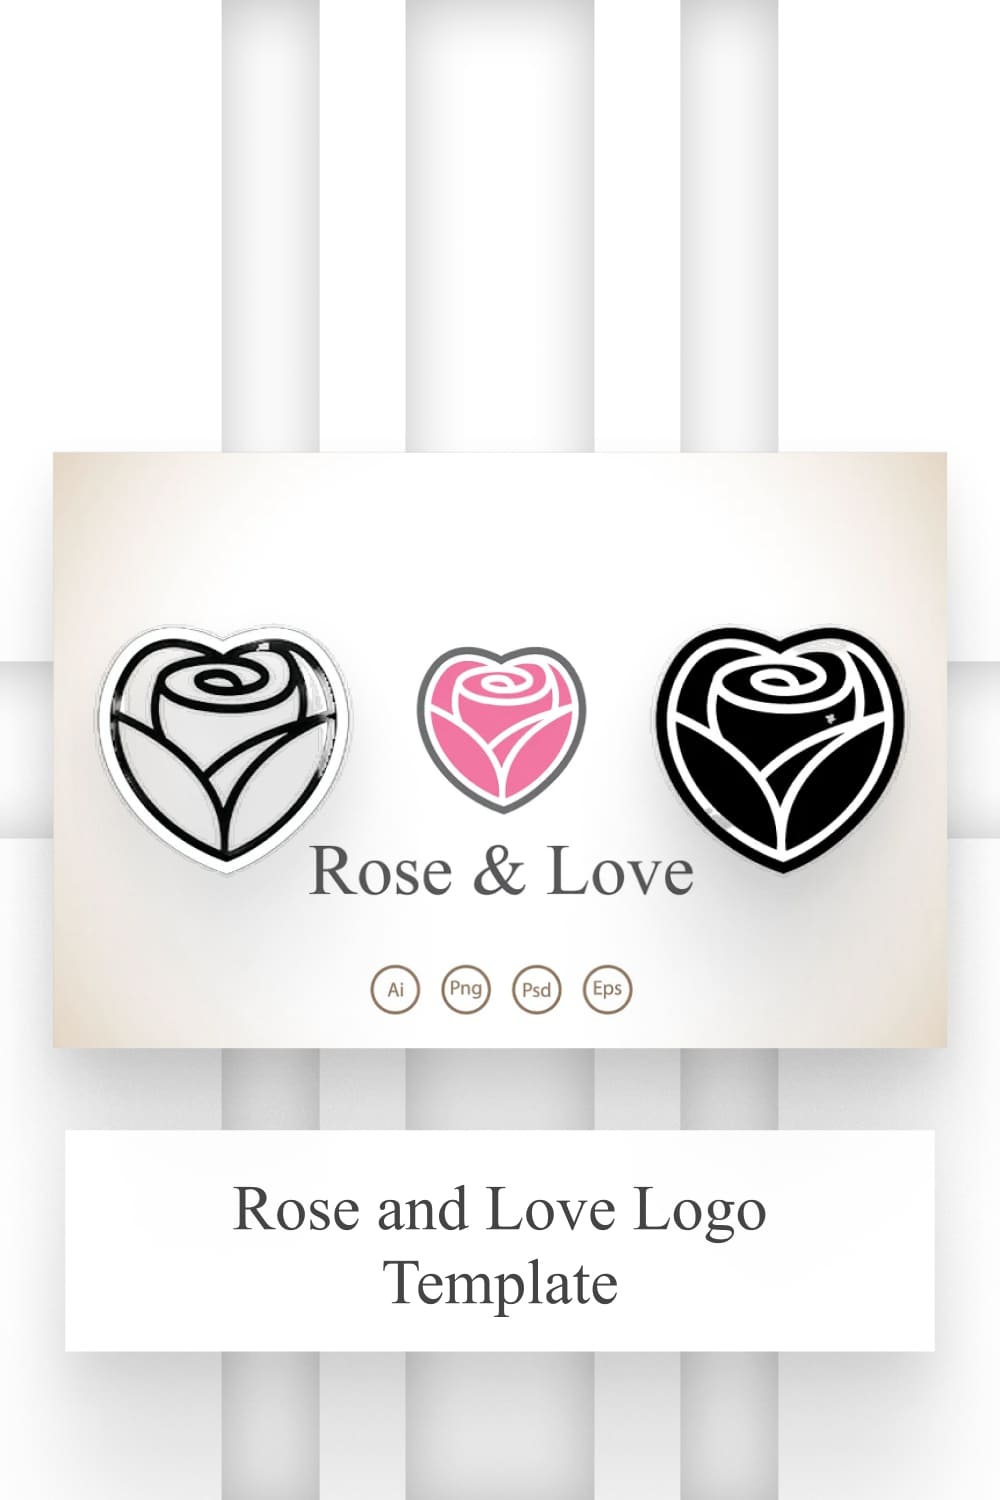 Three options of heart logos.